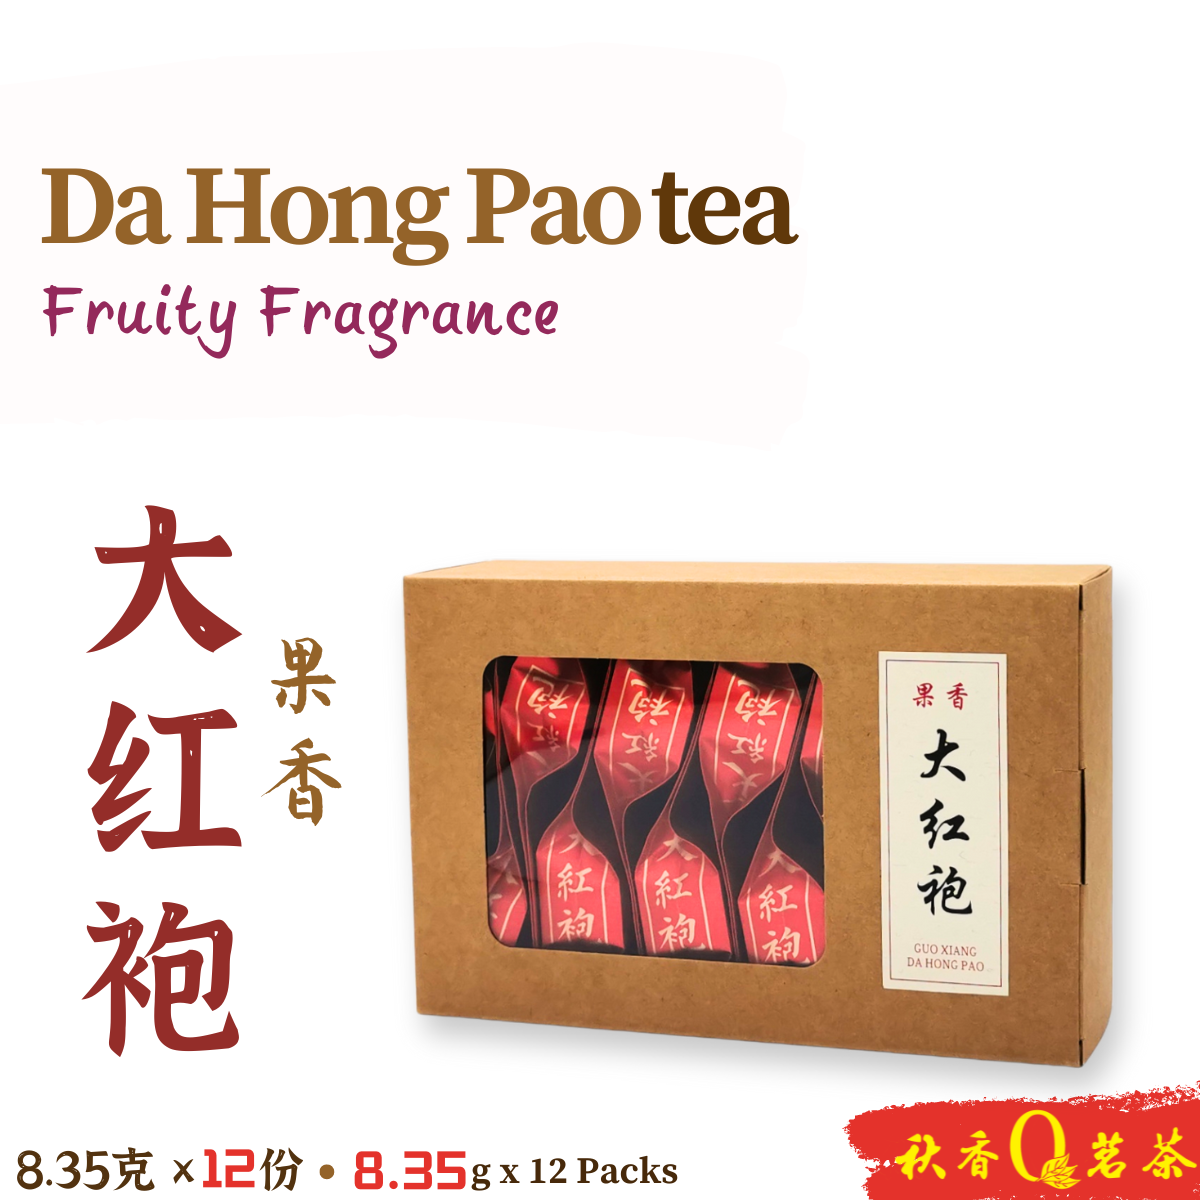 果香大红袍 Fruity Fragrance Da Hong Pao Tea【12 Packs x 8.35g】|【武夷岩茶 WuYi Rock Tea】